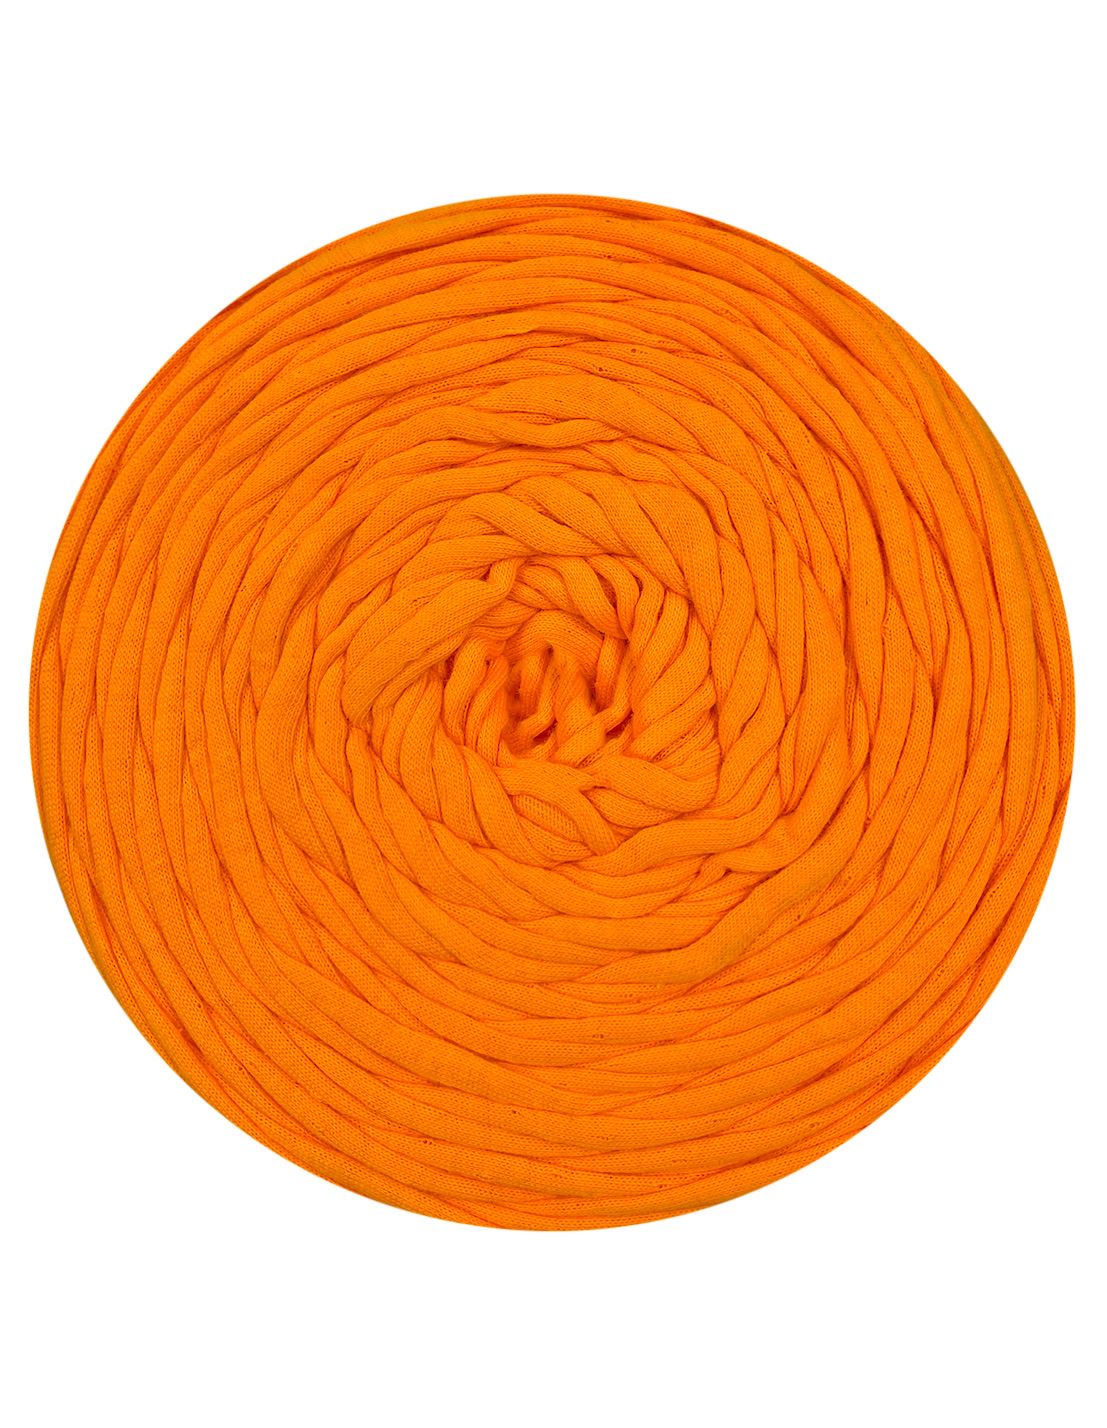 Very bright orange t-shirt yarn by Hoooked Zpagetti (100-120m)